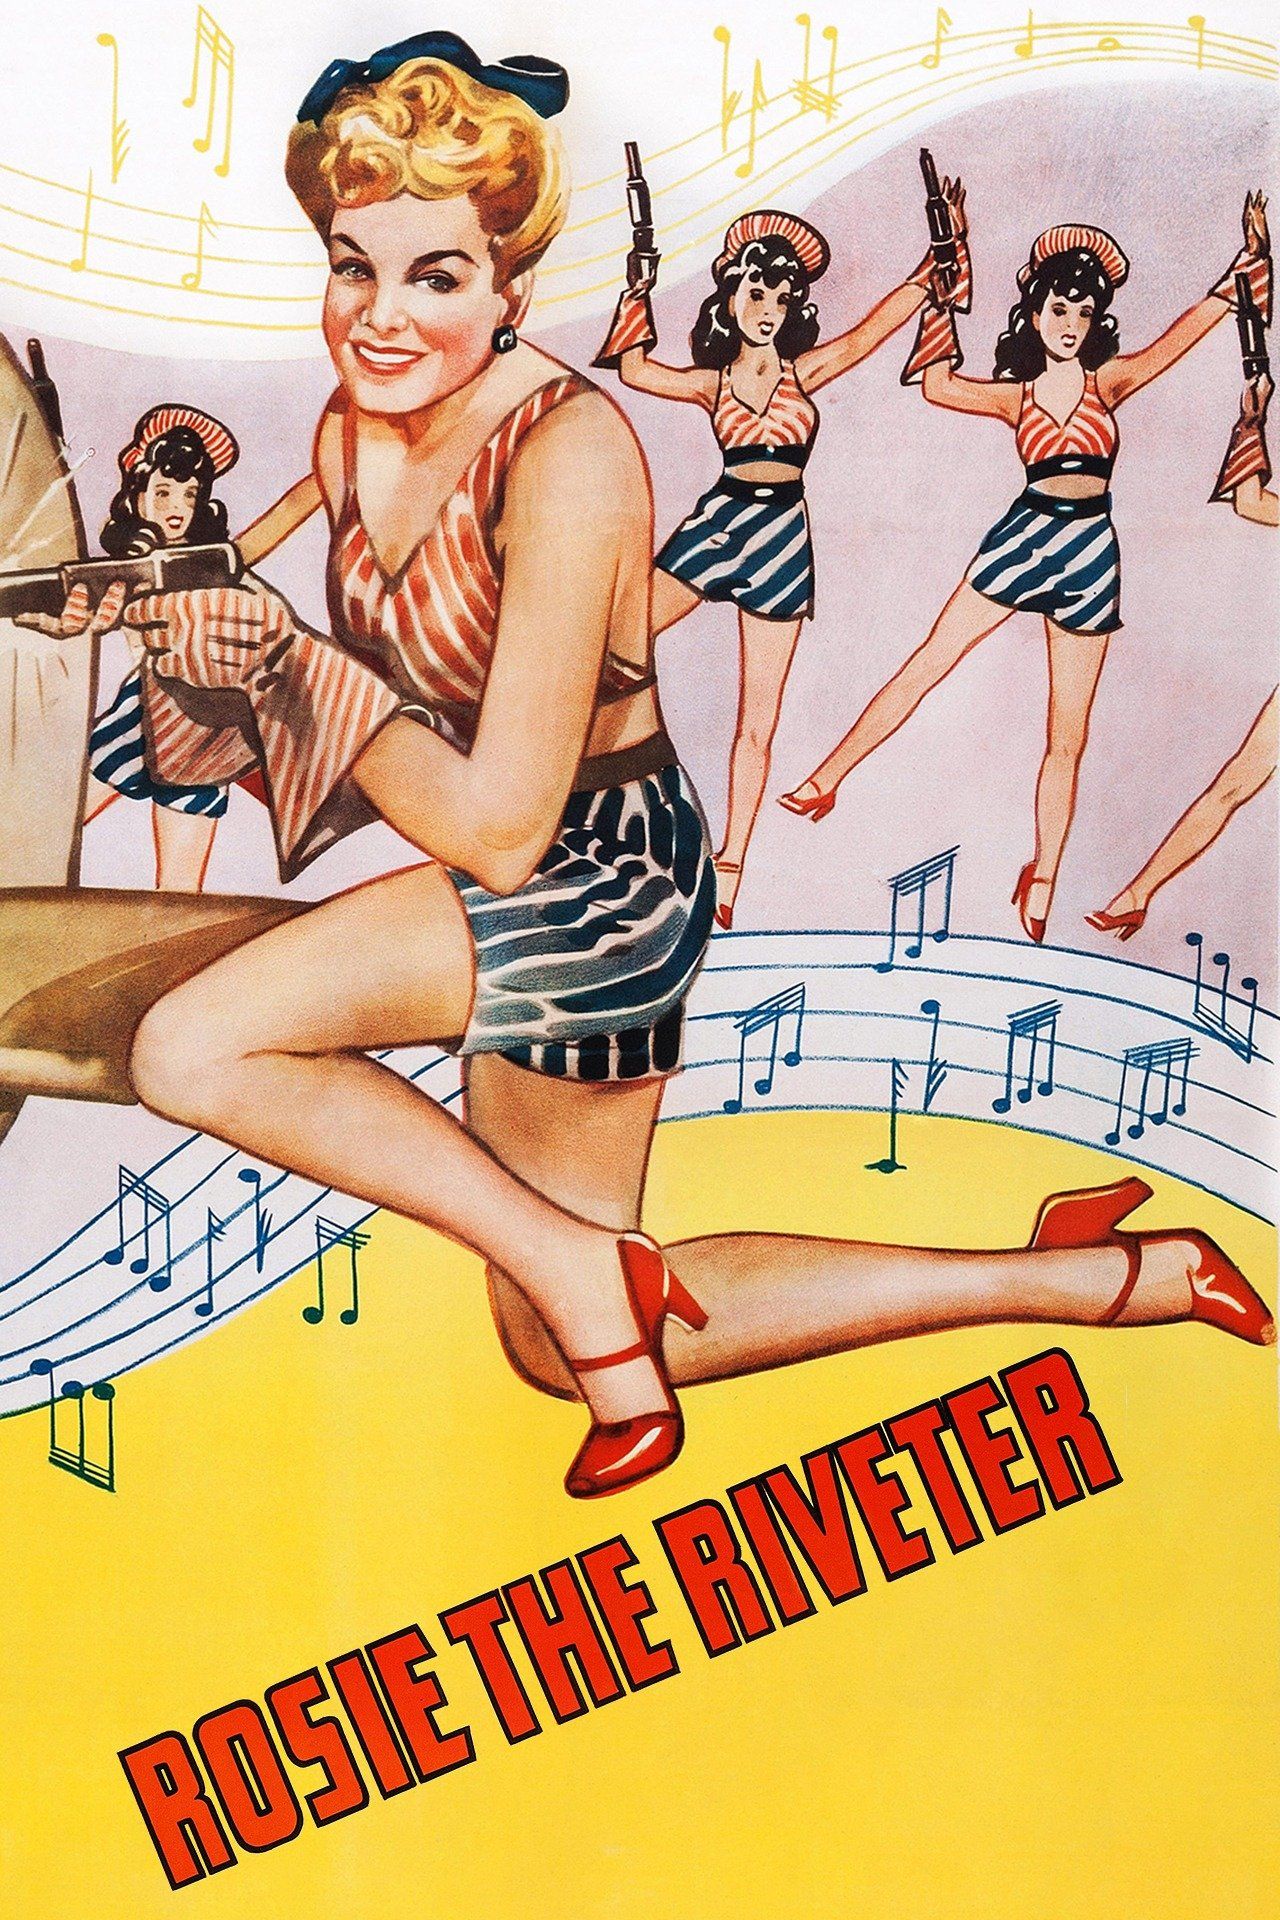  Rosie the Riveter [DVD] : Movies & TV